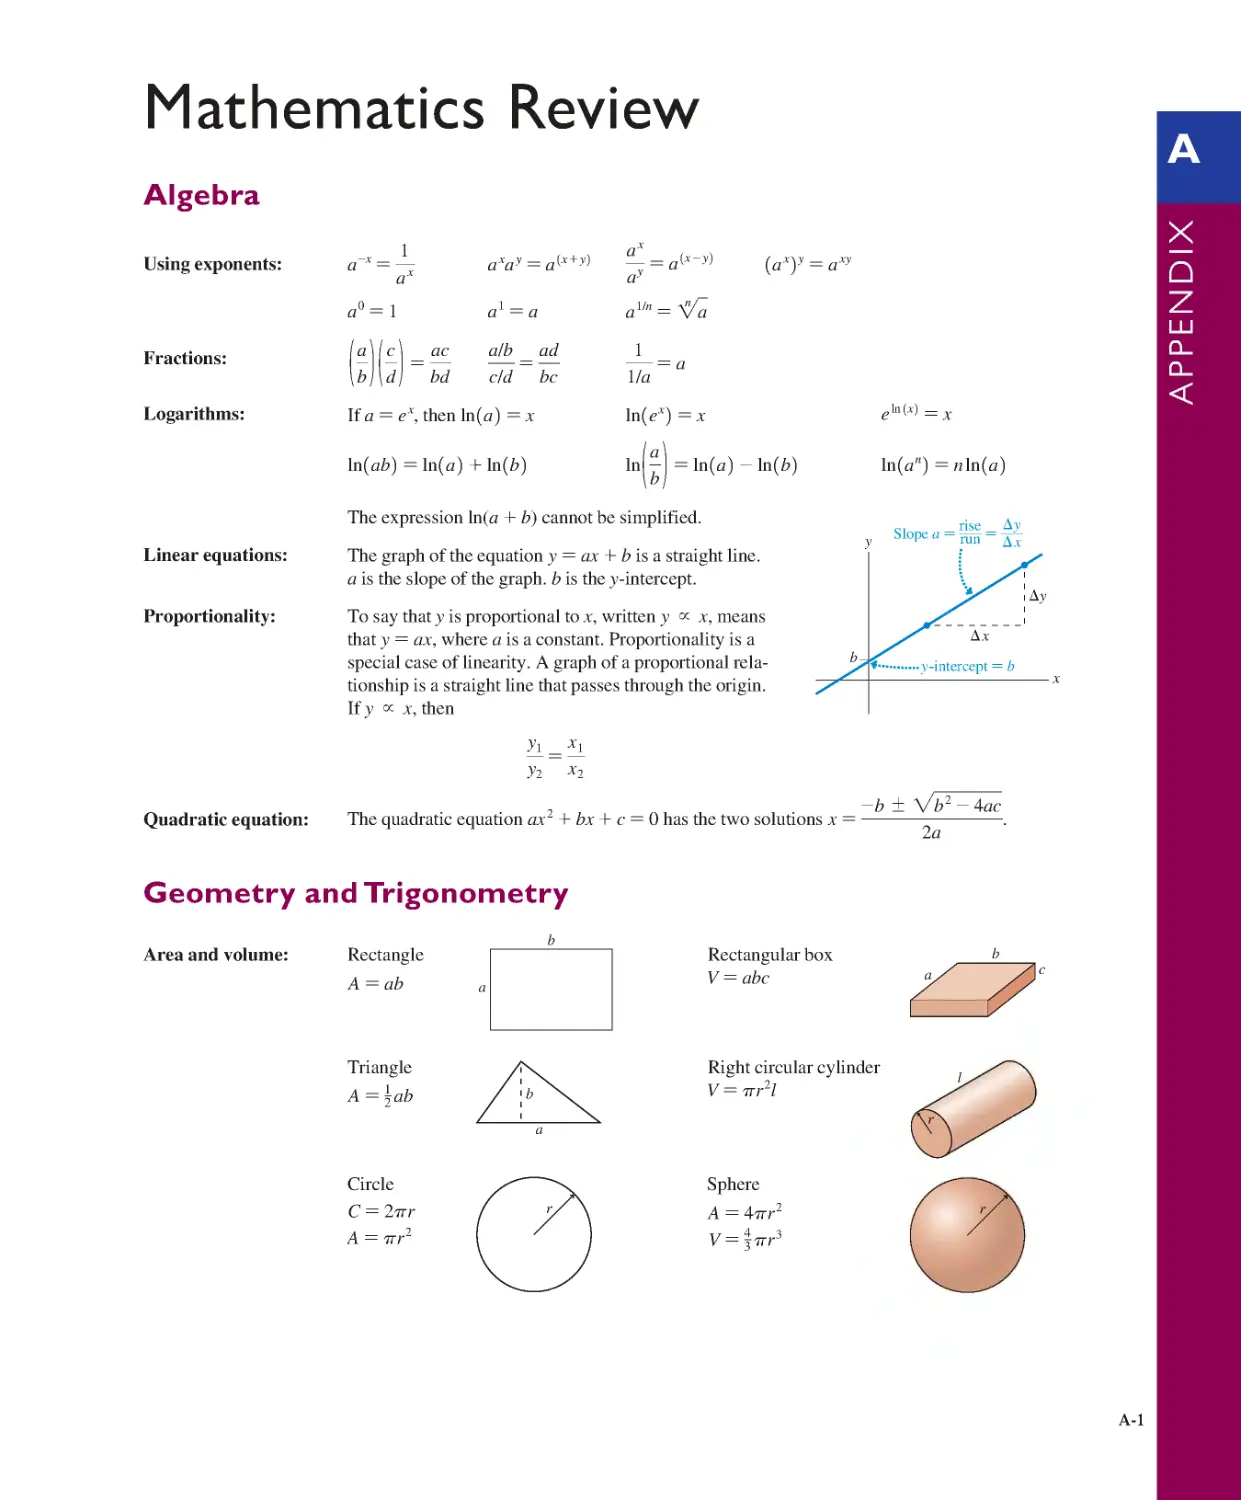 Appendix A: Mathematics Review